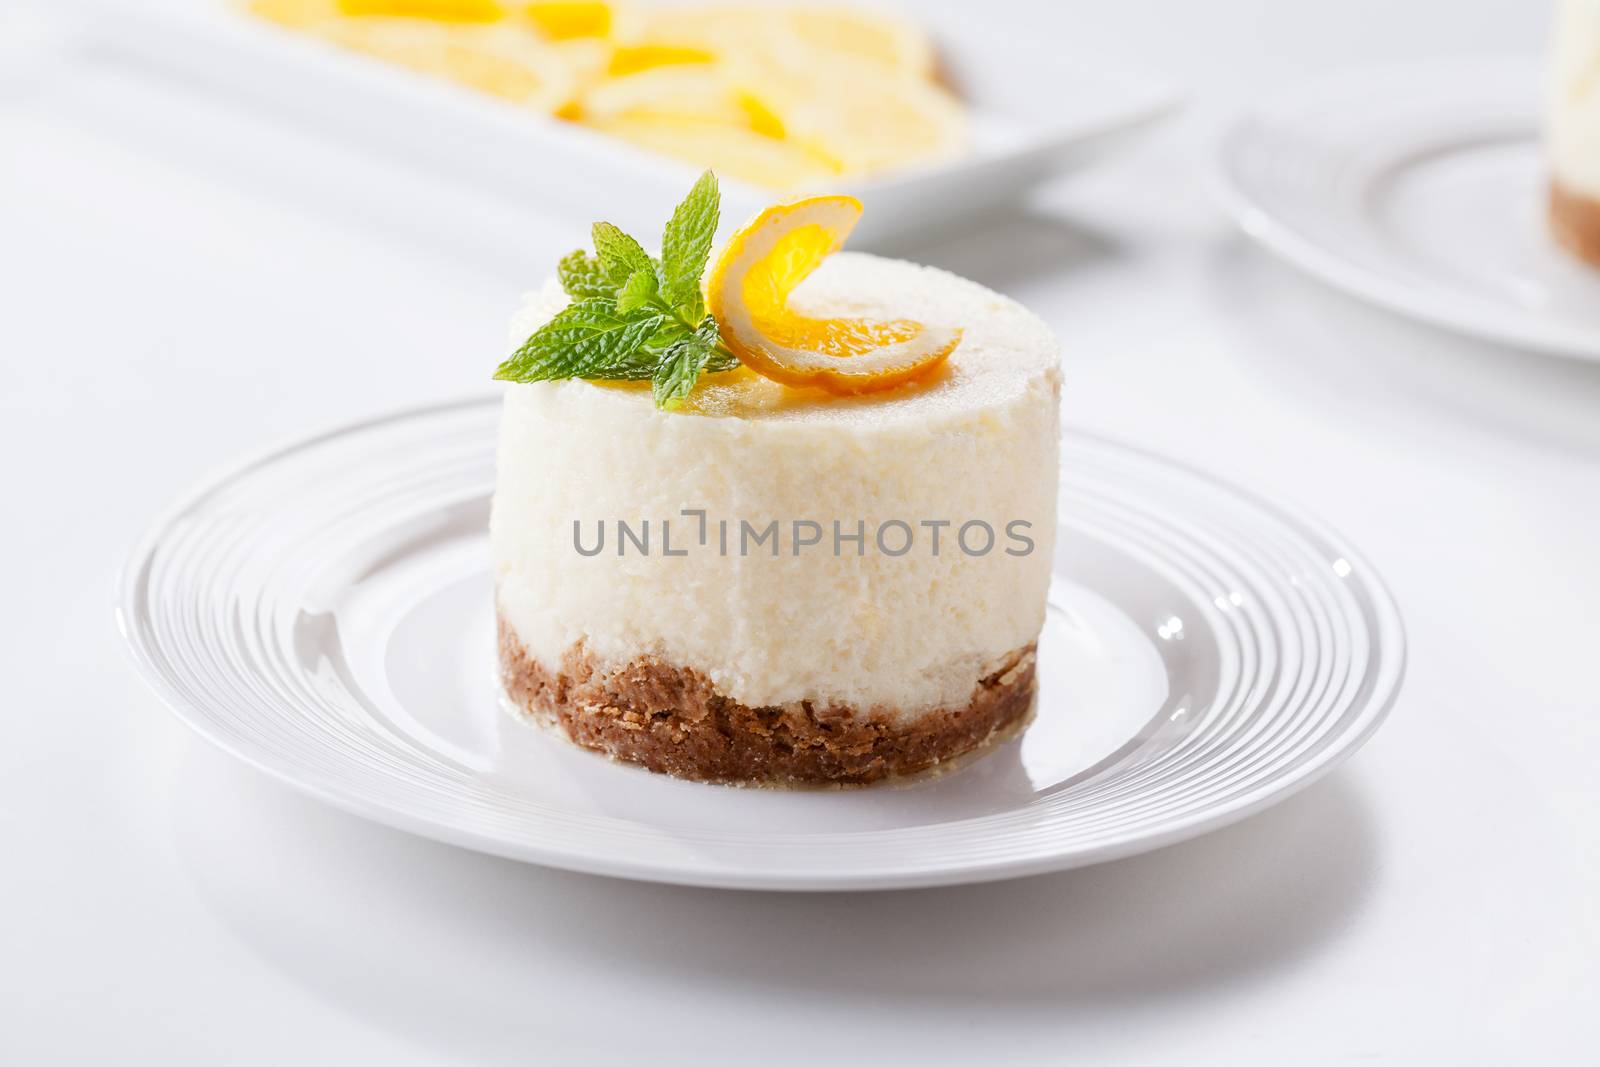 Cheesecake Dessert With Organic Oranges by mpessaris